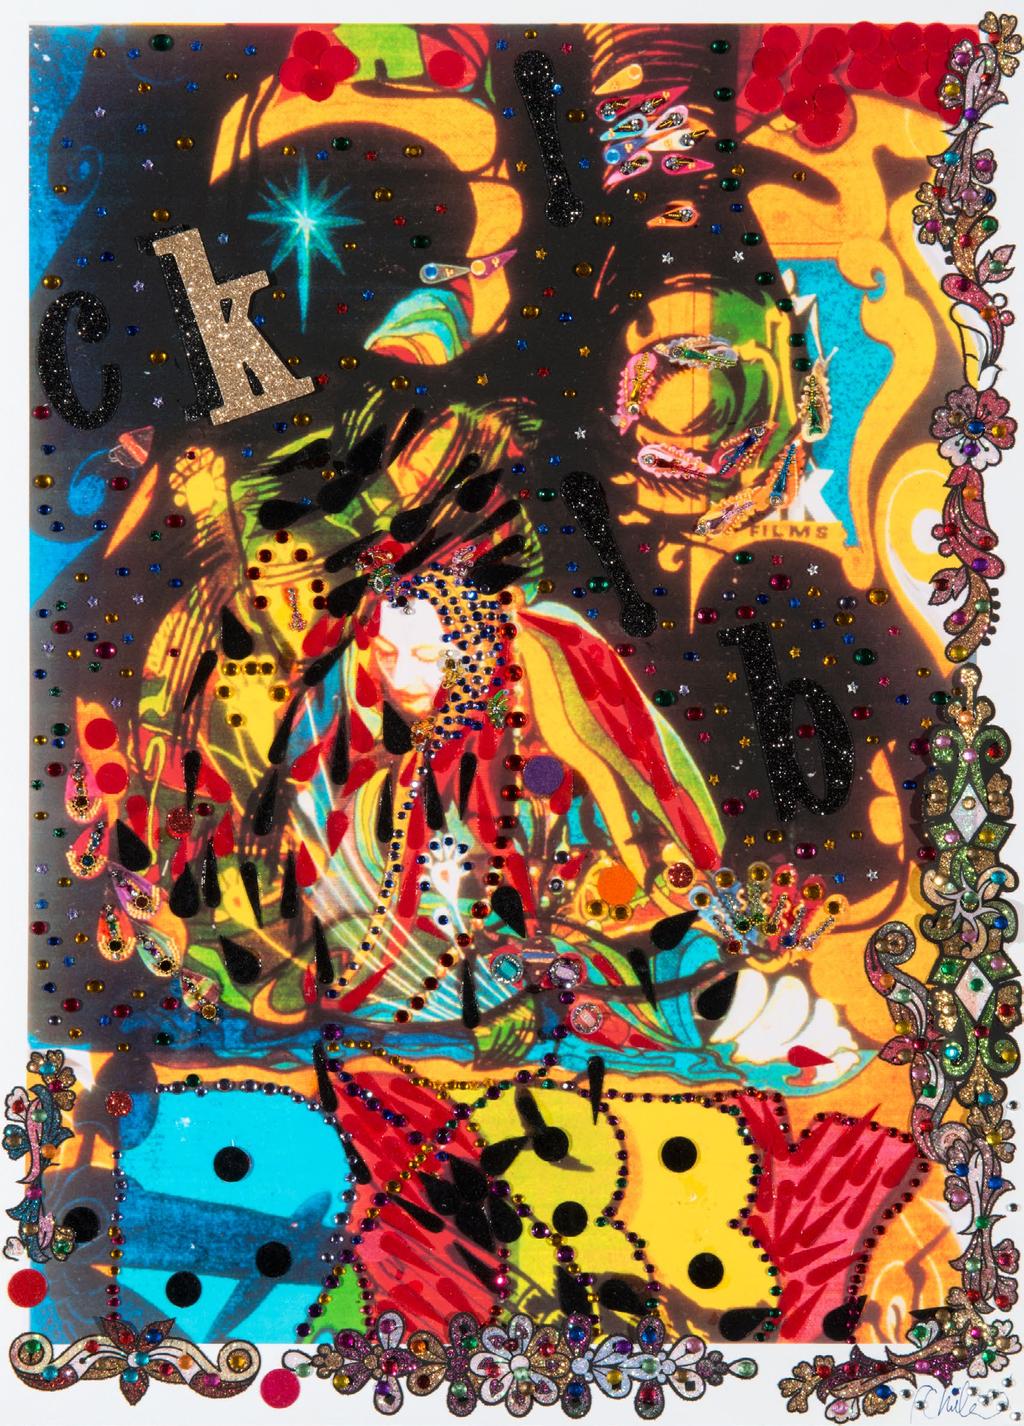 Chila Kumari Burman, Armour, 2005, mixed media collage on paper (42 x